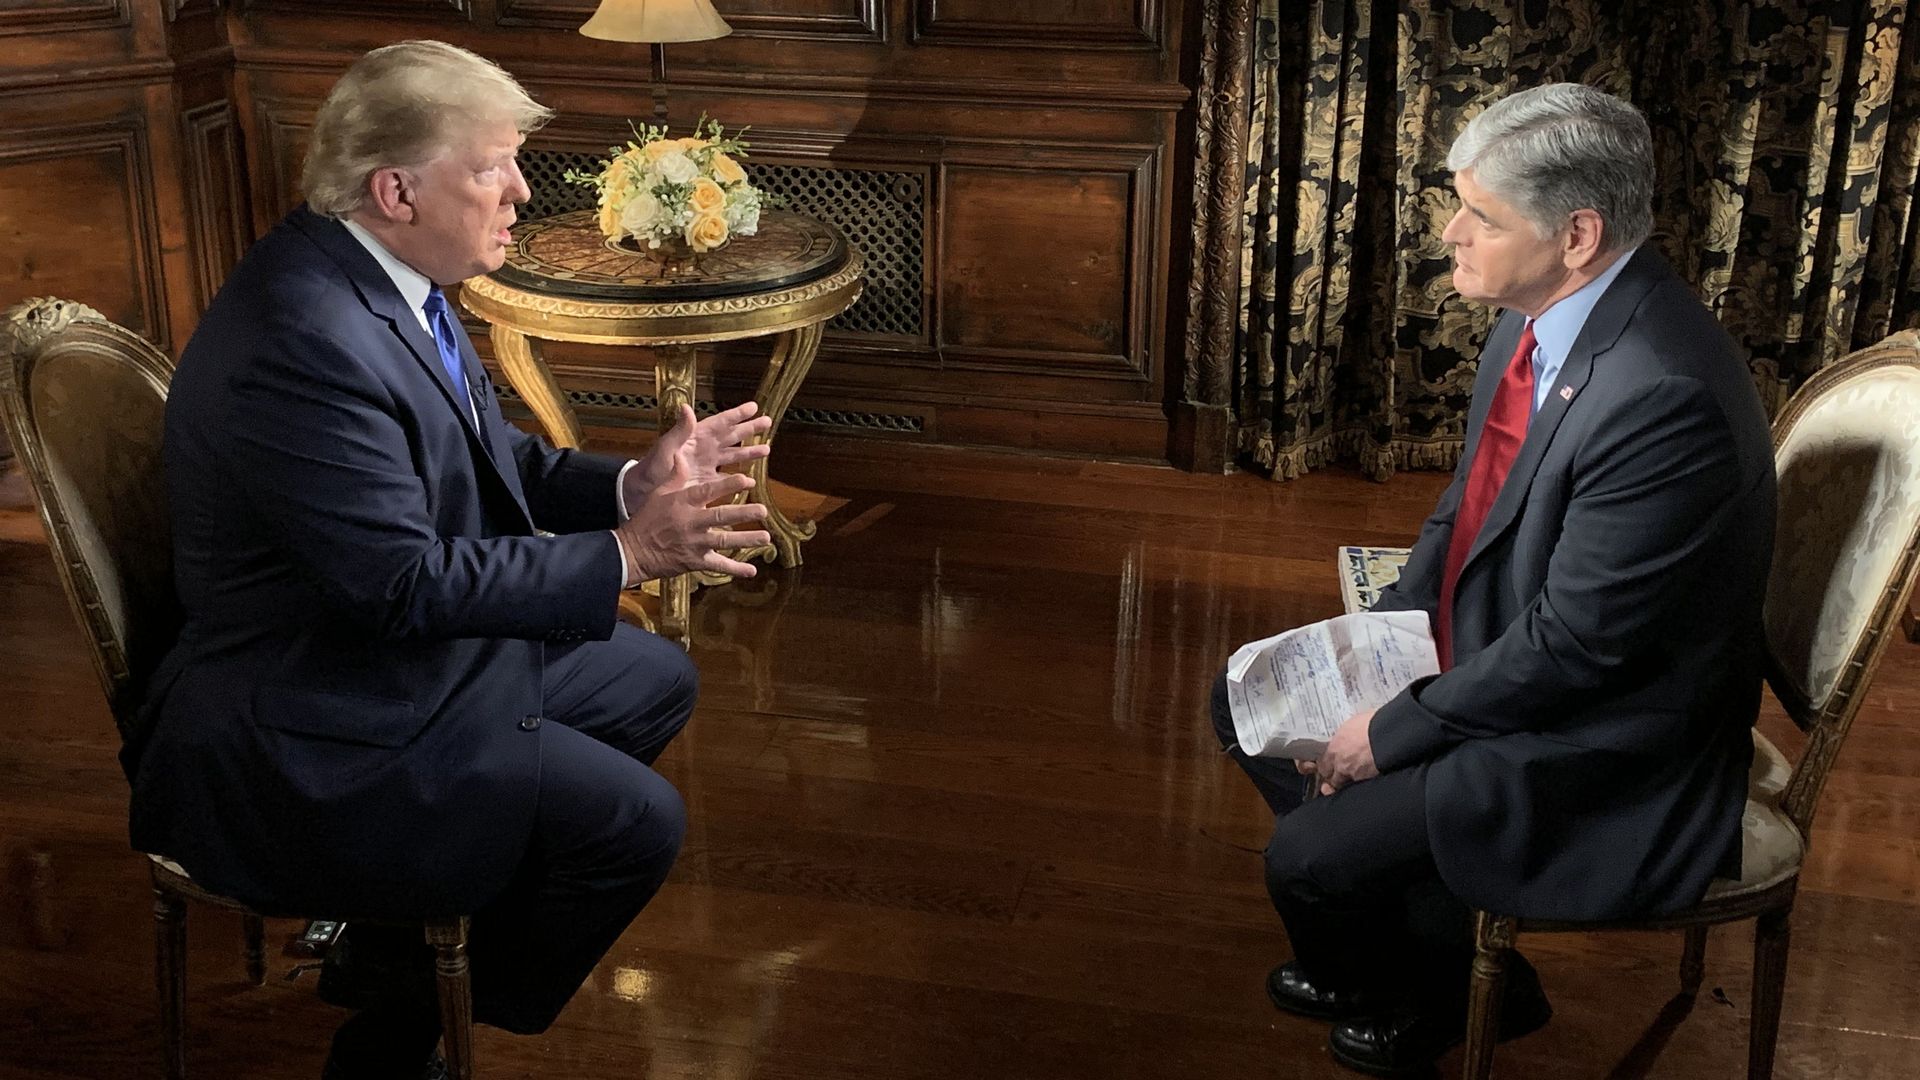 Sean Hannity interviewing President Trump